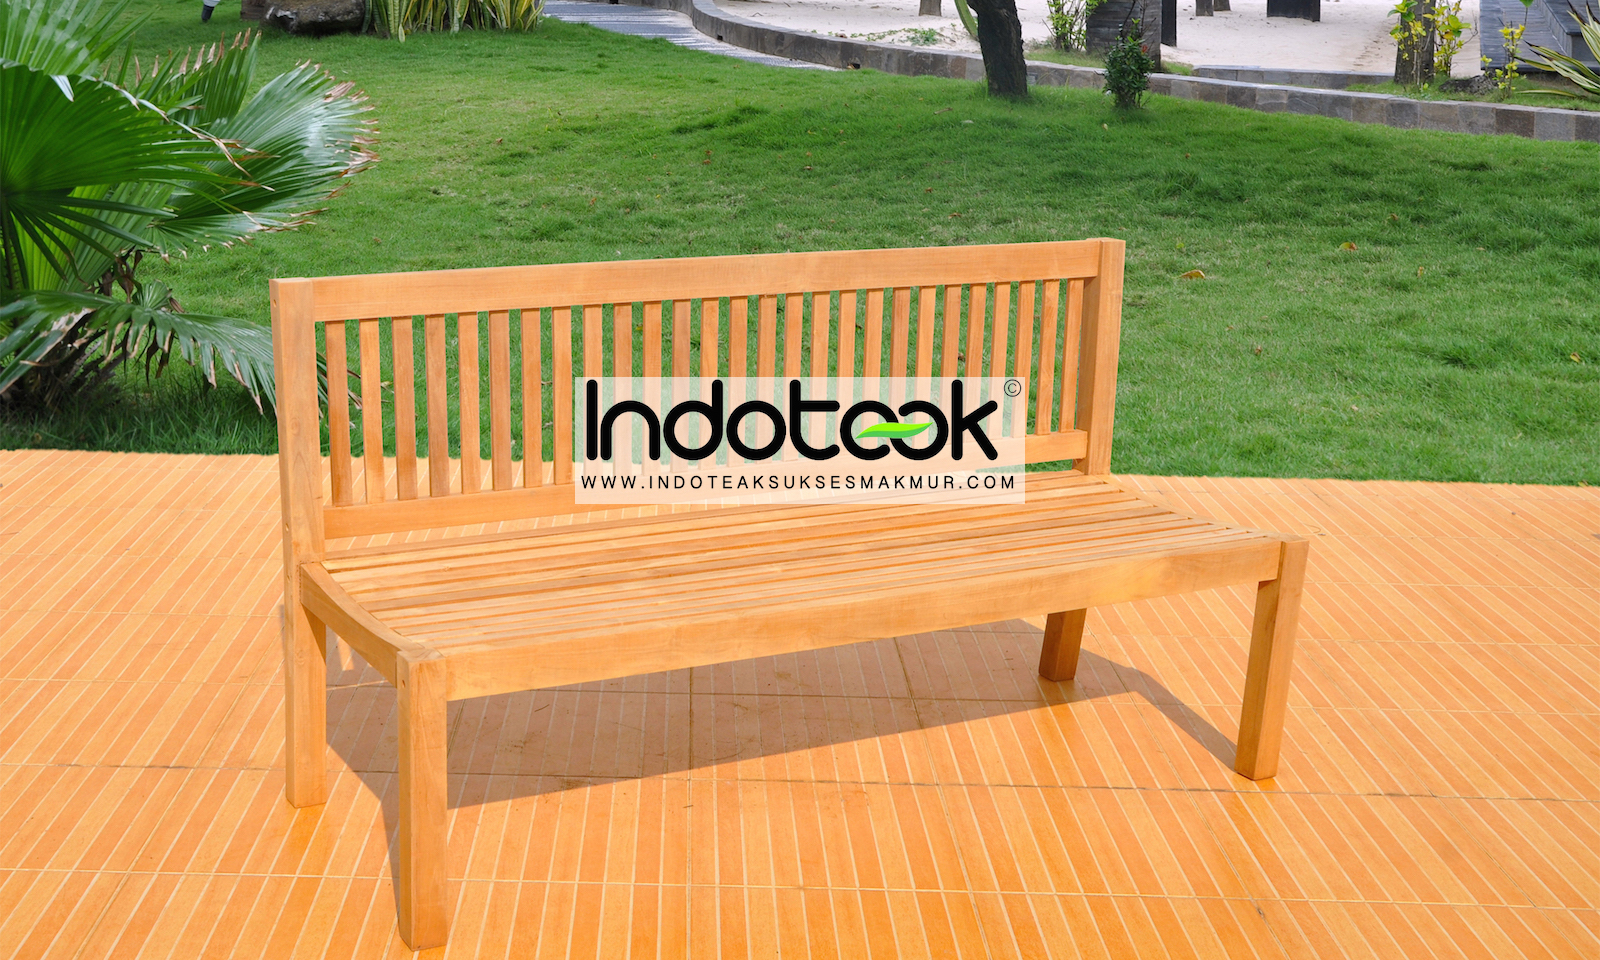 Teak garden furniture manufacturer and supplier from Jepara Indonesia